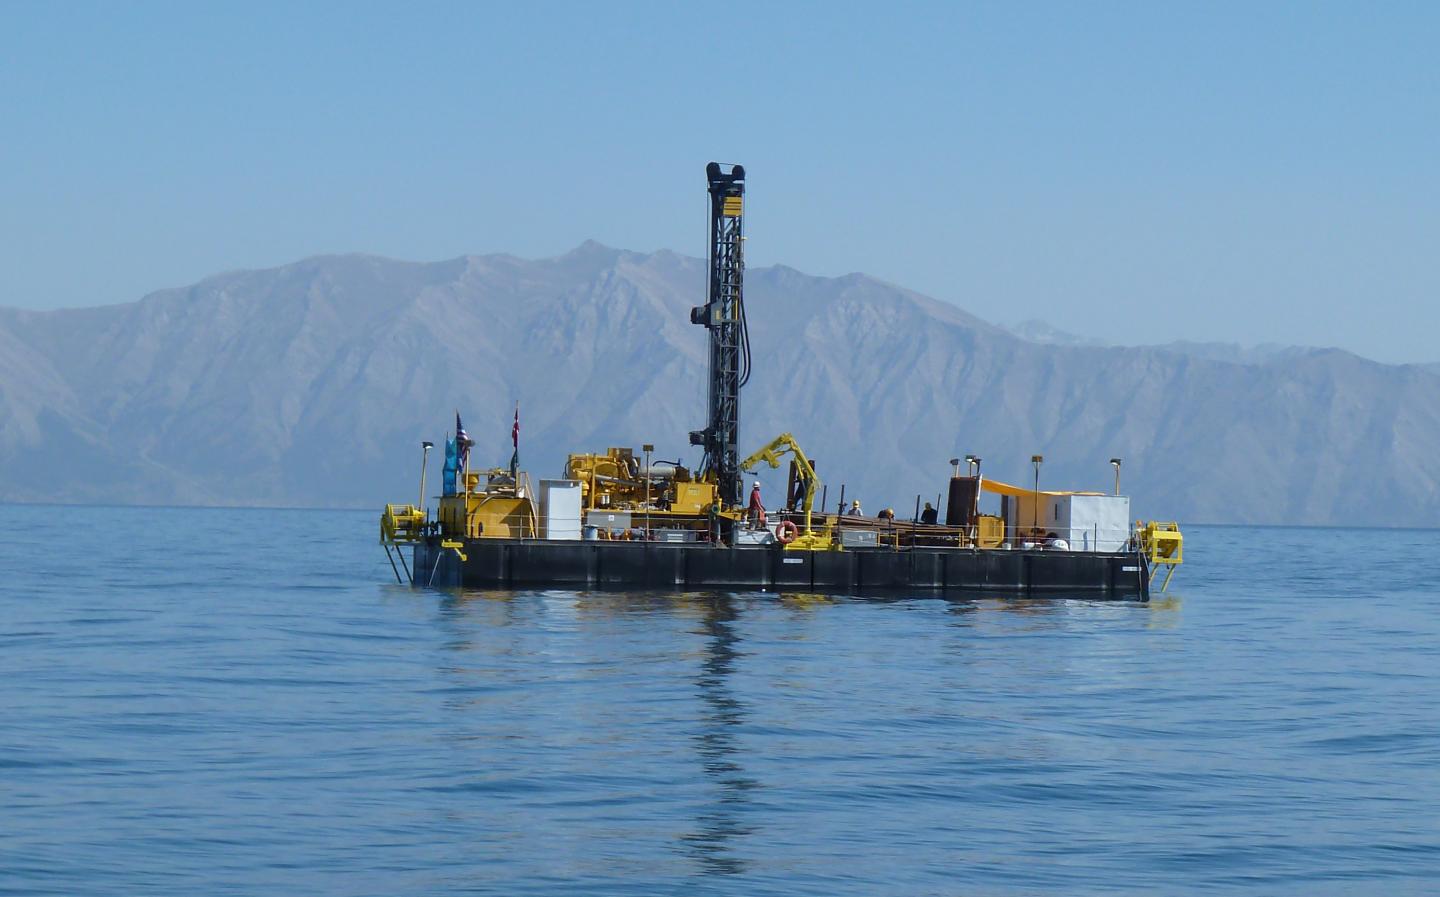 Deep Lake Drilling System: